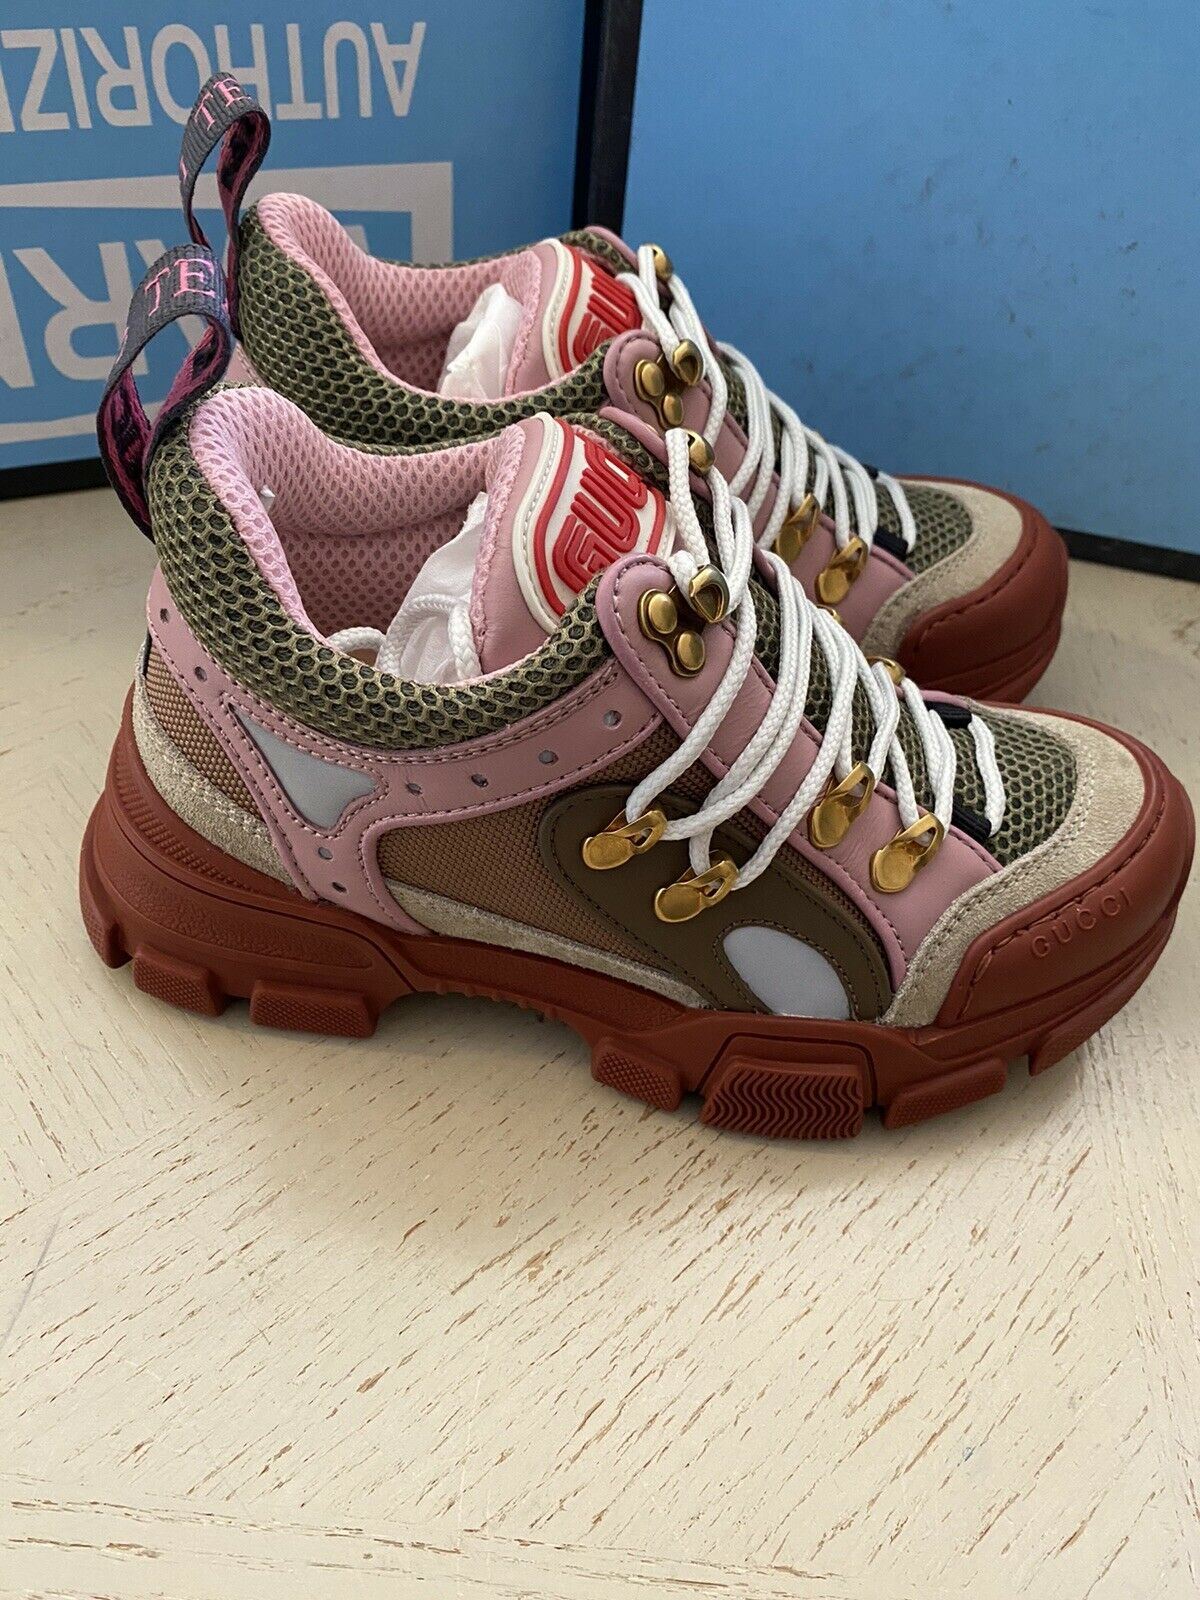 NIB $ 1300 Gucci Damen Sneakers Schuhe Militärgrün/Rot/Pink 5 US/35 Eu